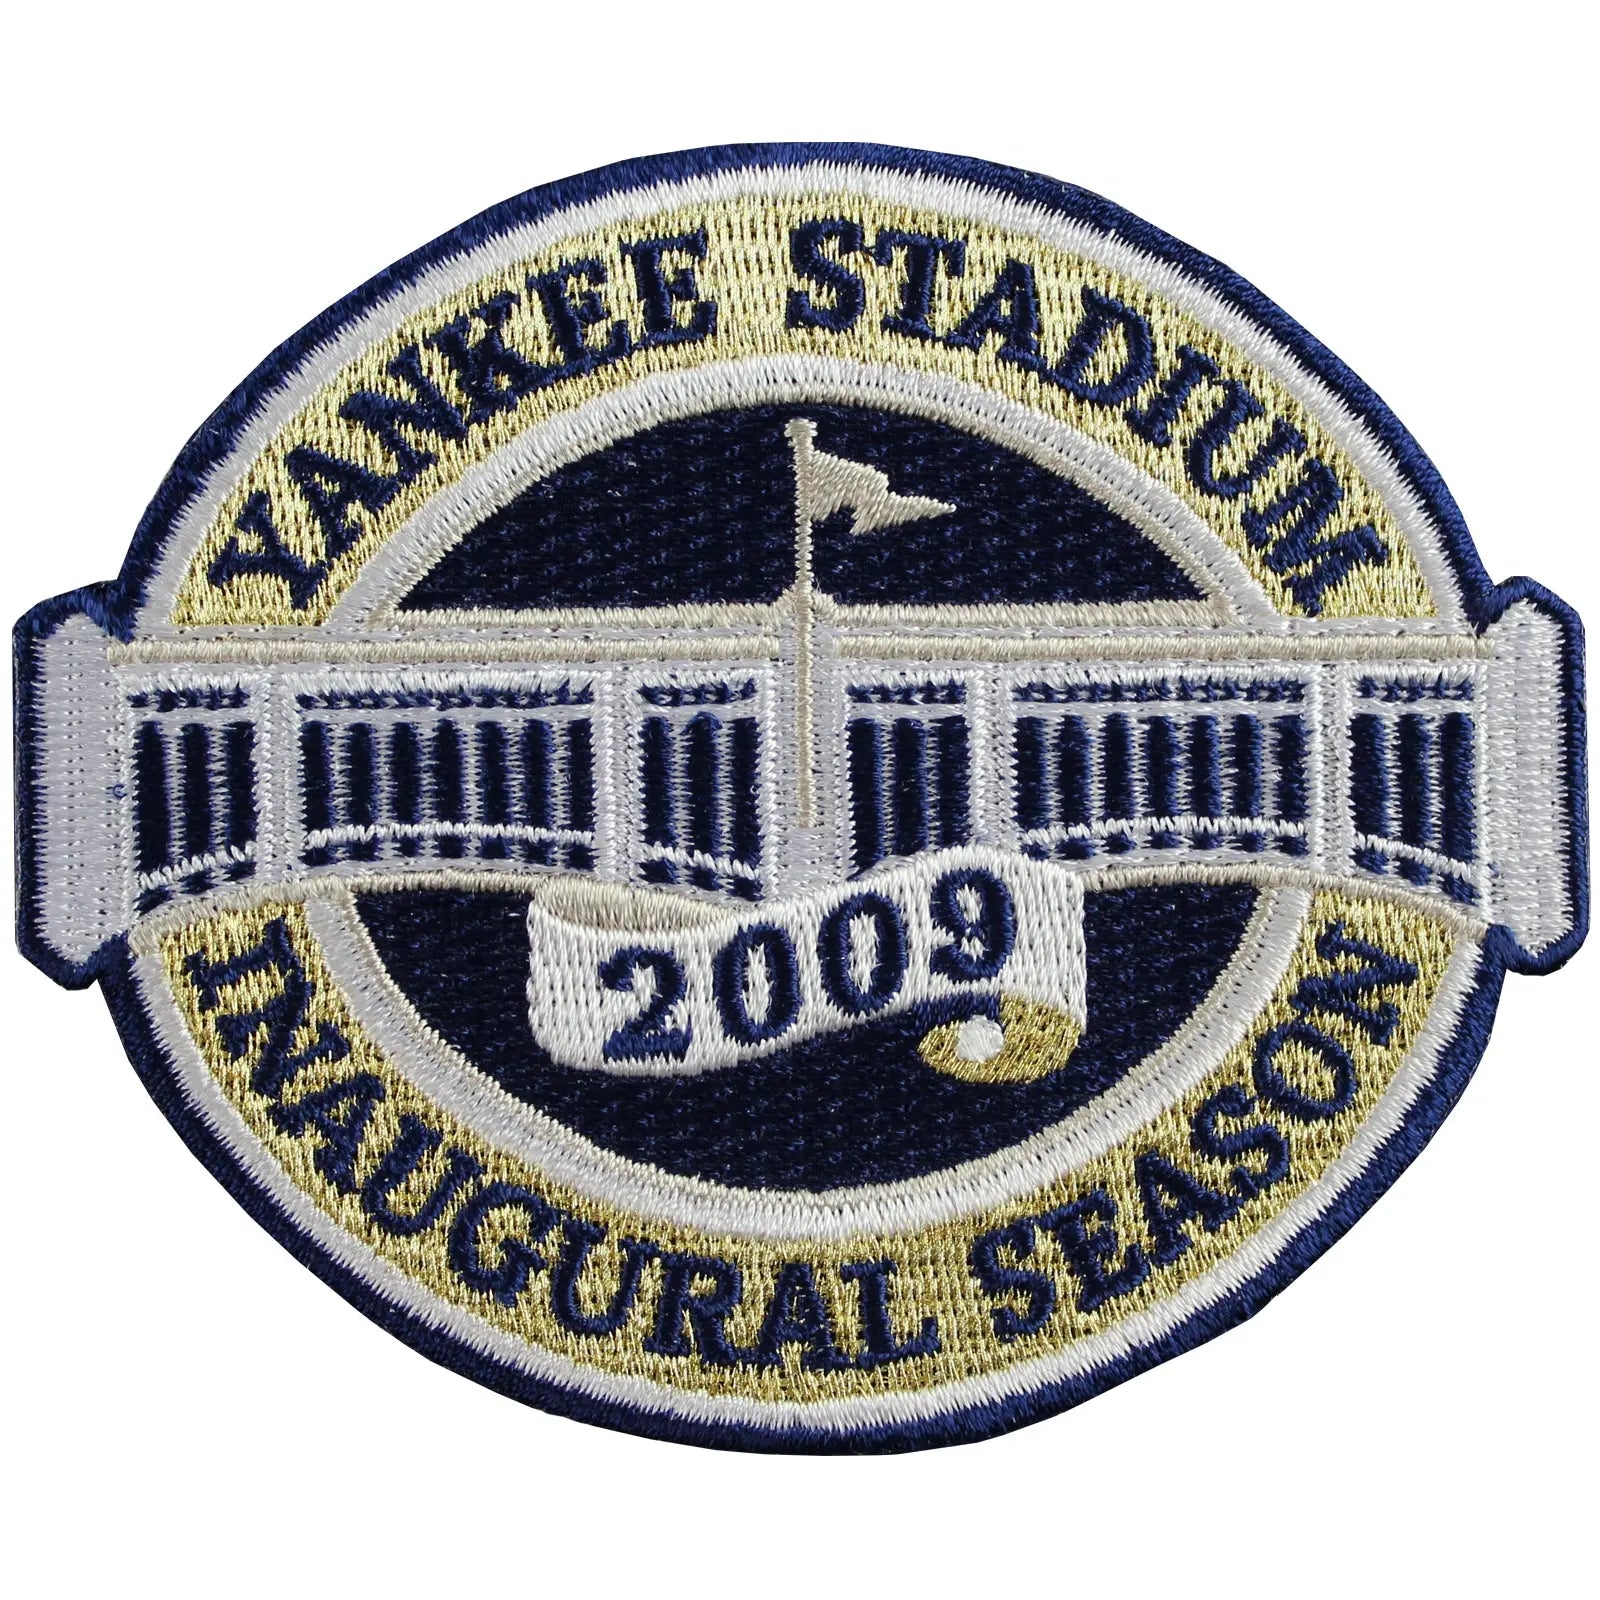 2009 New York Yankees Stadium Inaugural Season Patch 